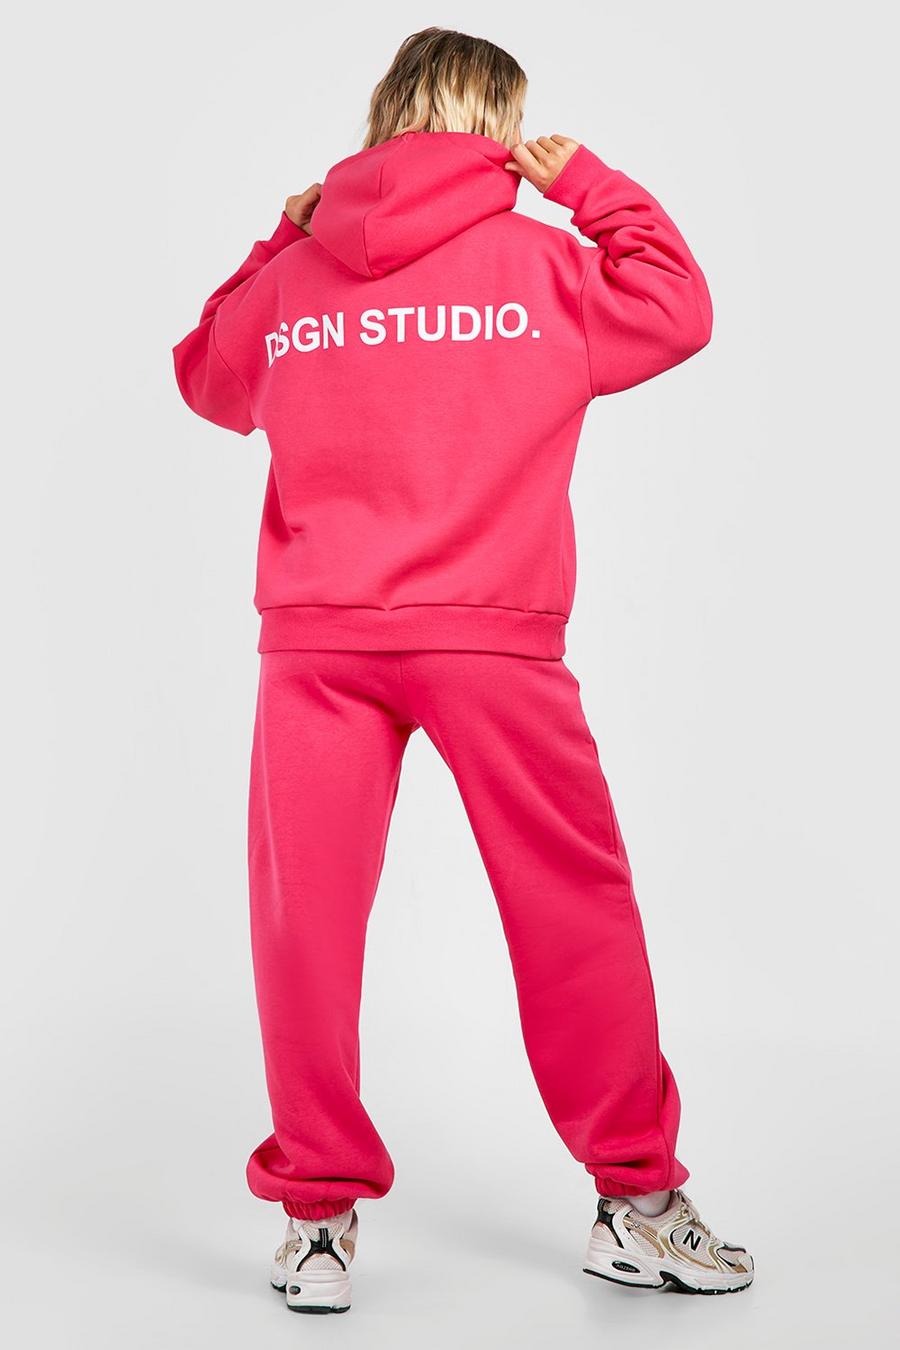 Dsgn Studio Trainingsanzug mit Kapuze, Hot pink image number 1